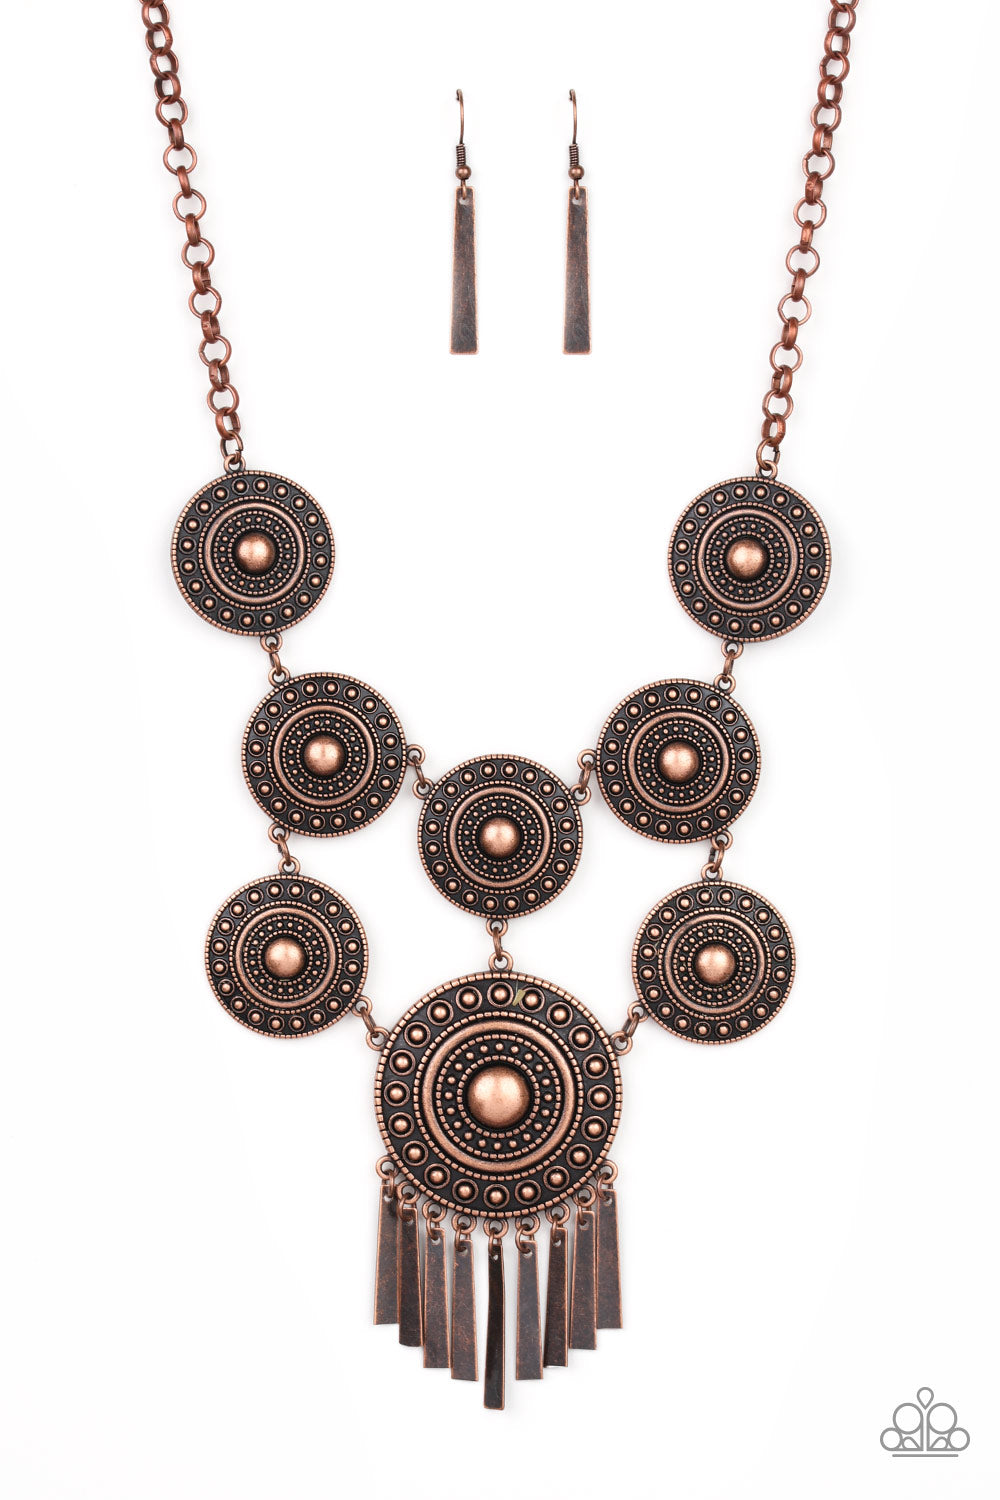 Paparazzi Necklaces - Modern Medalist - Copper